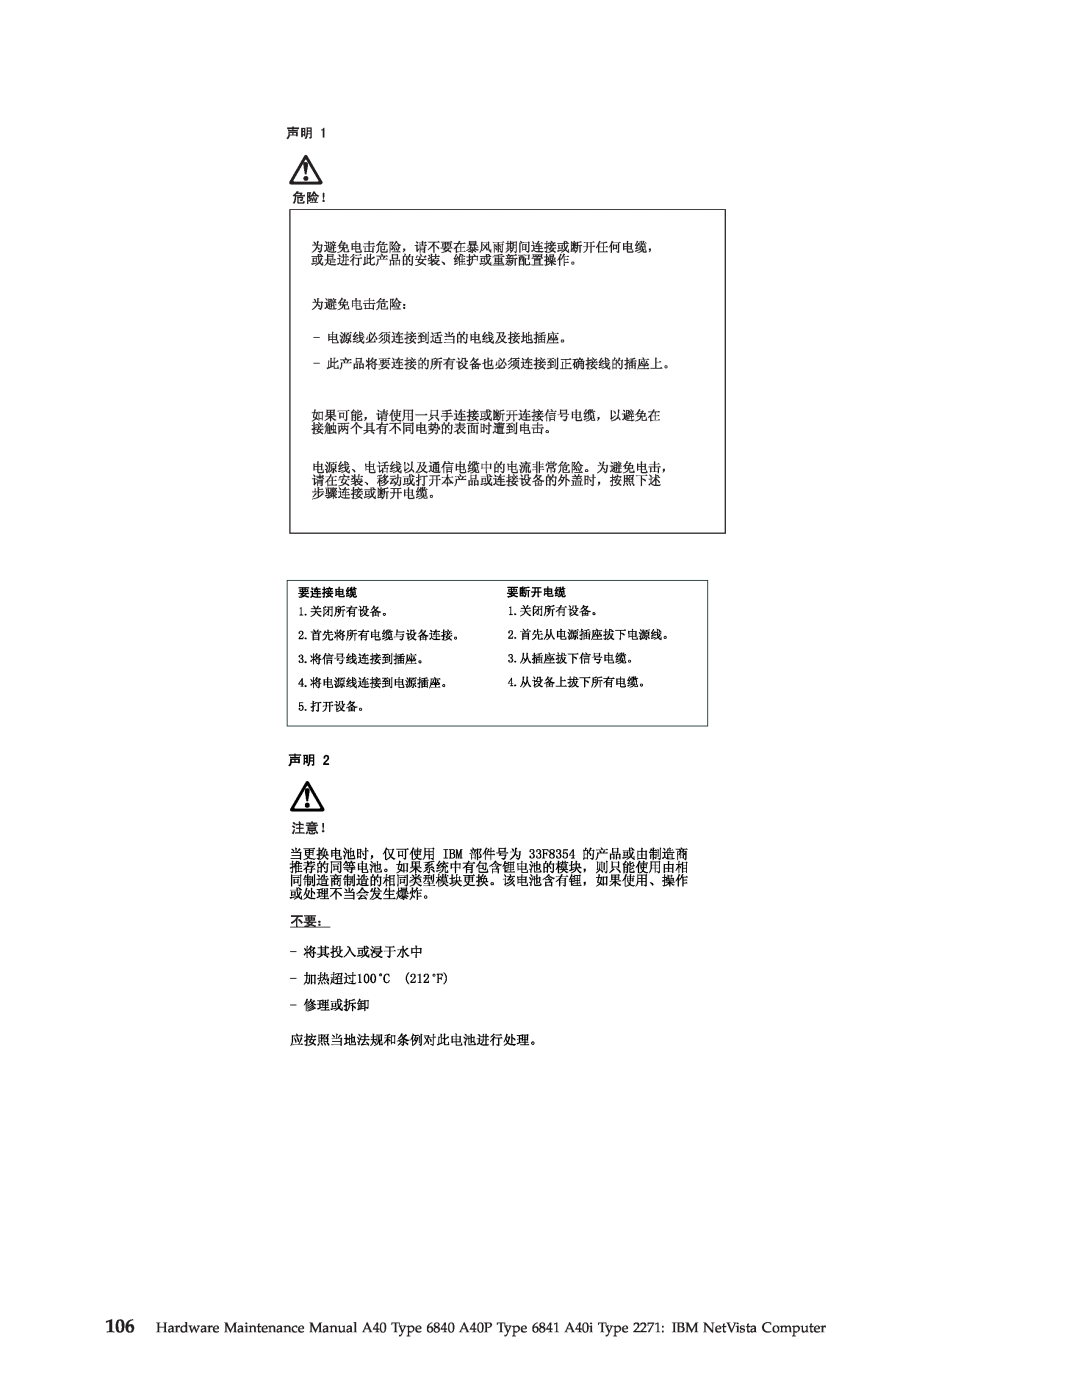 IBM A40P TYPE 6841, A40I TYPE 2271, A40 TYPE 6840 manual 